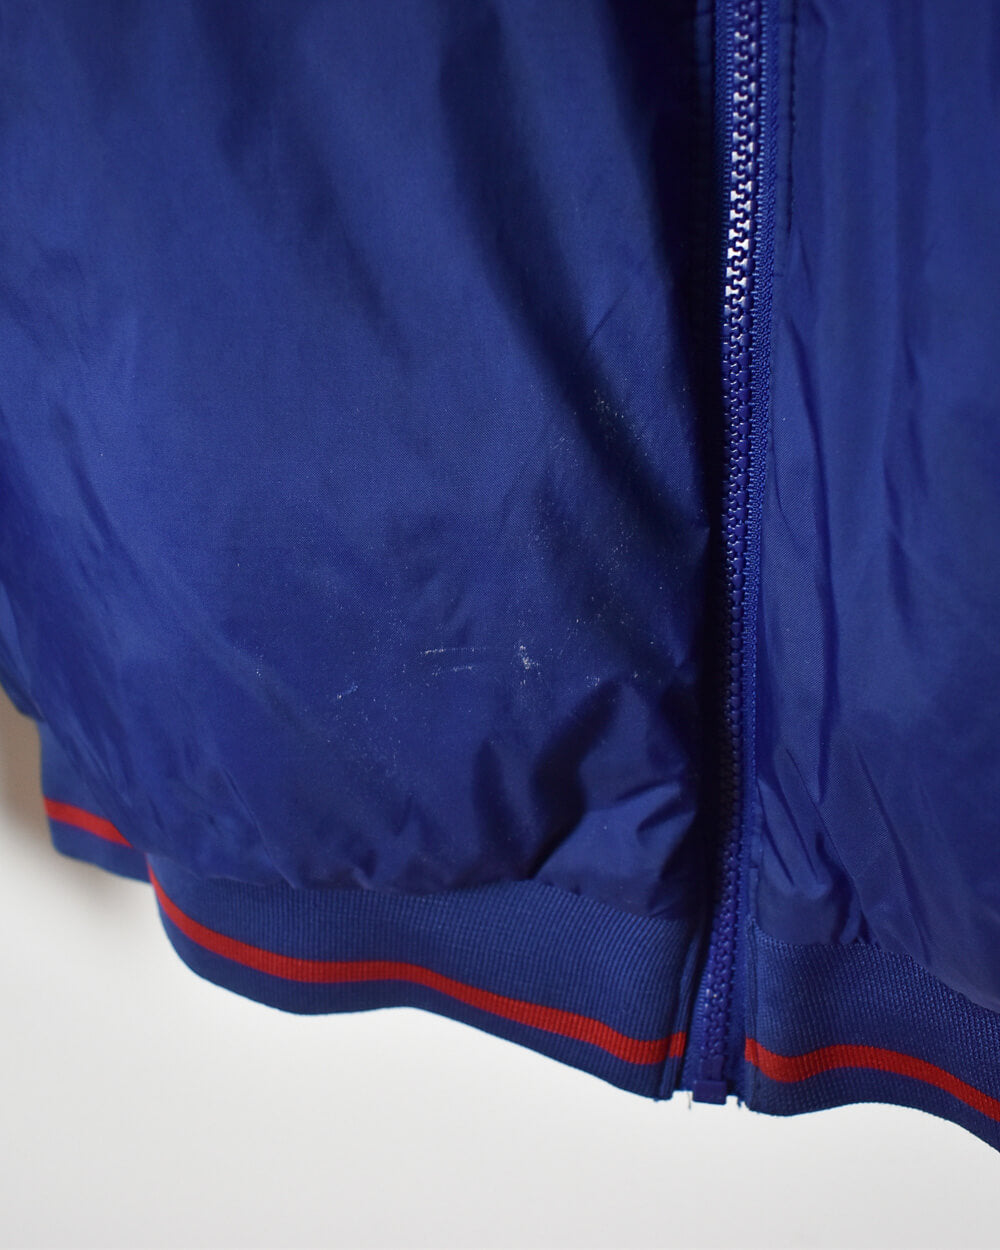 Nike Fleece Lined Coat - Medium - Domno Vintage 90s, 80s, 00s Retro and Vintage Clothing 